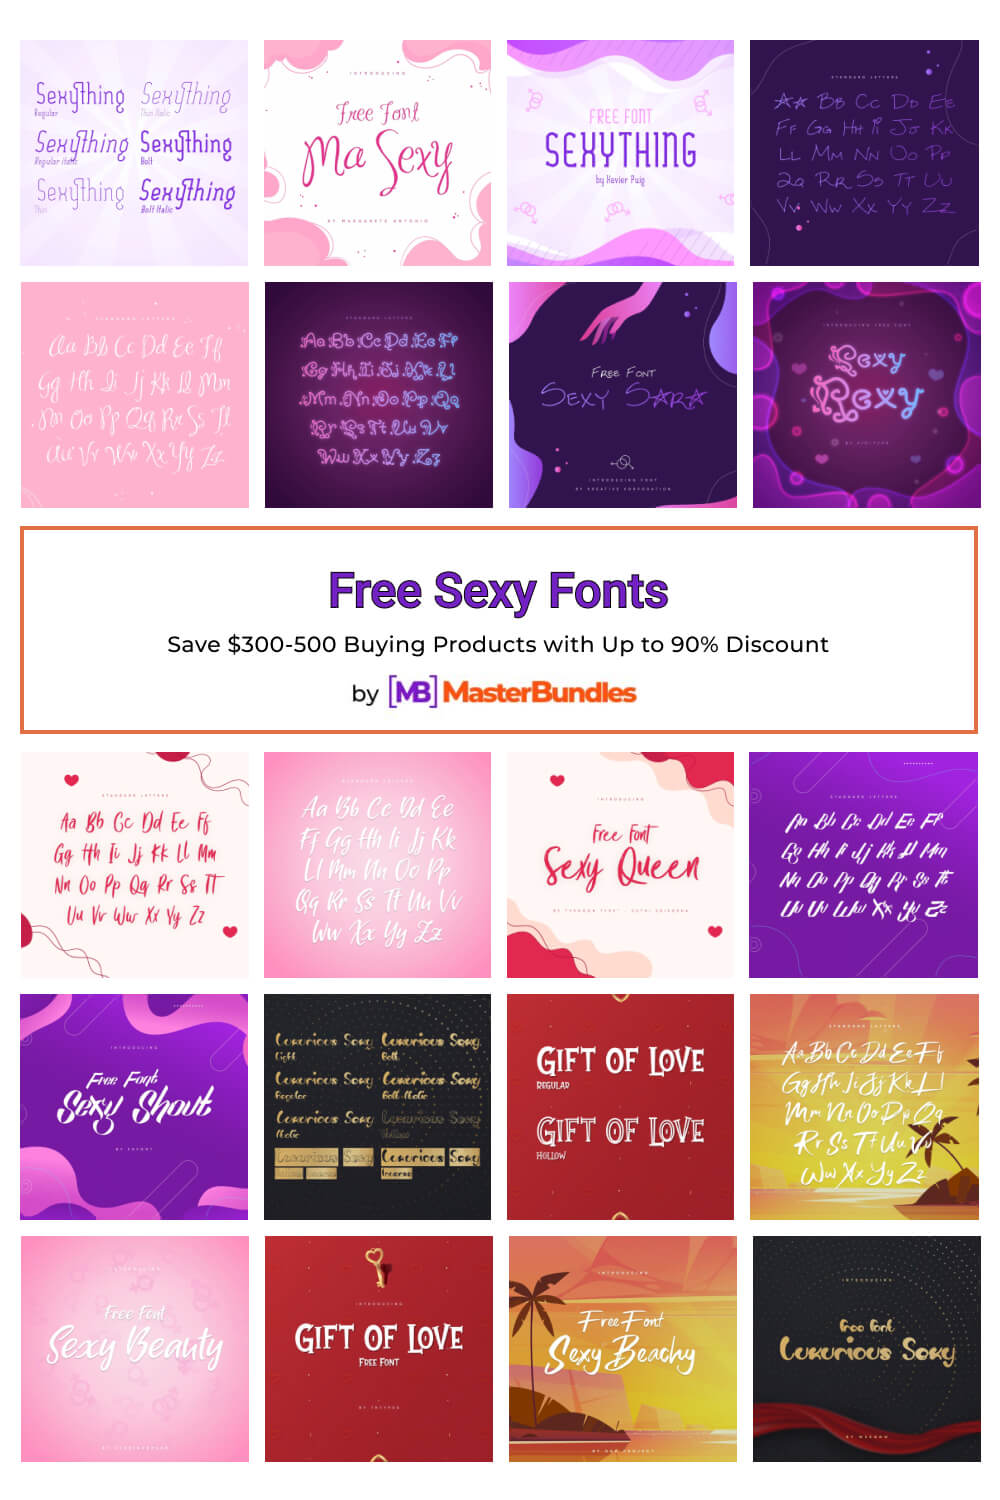 free sexy fonts pinterest image.